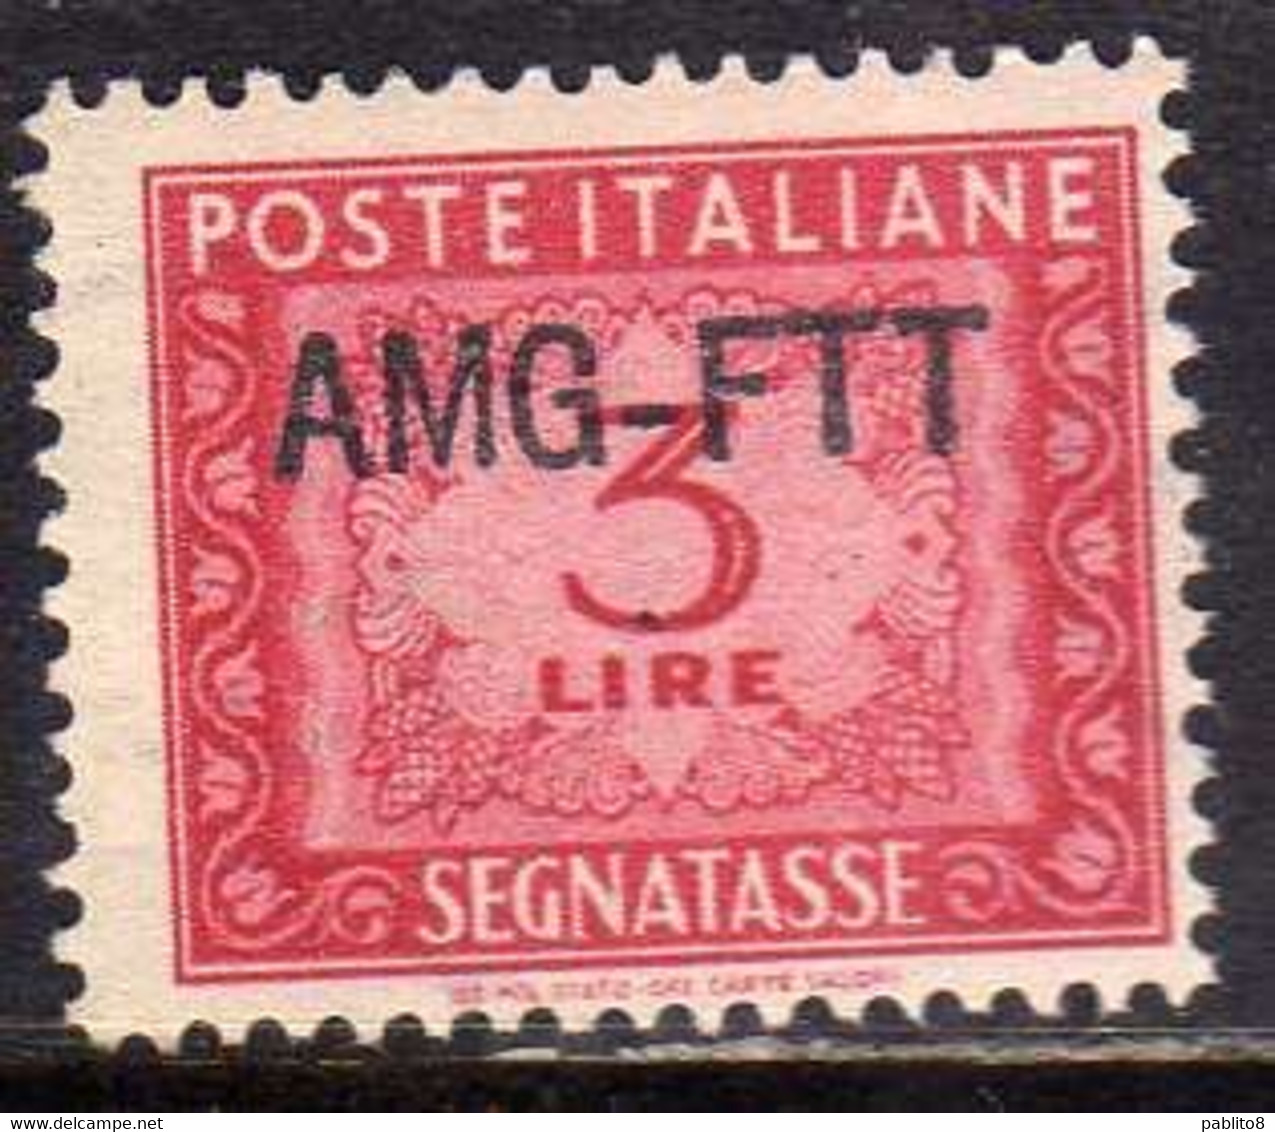 TRIESTE A 1949 1954 AMG-FTT SOPRASTAMPATO D'ITALIA ITALY OVERPRINTED SEGNATASSE POSTAGE DUE TAXES TASSE LIRE 3 MNH - Strafport